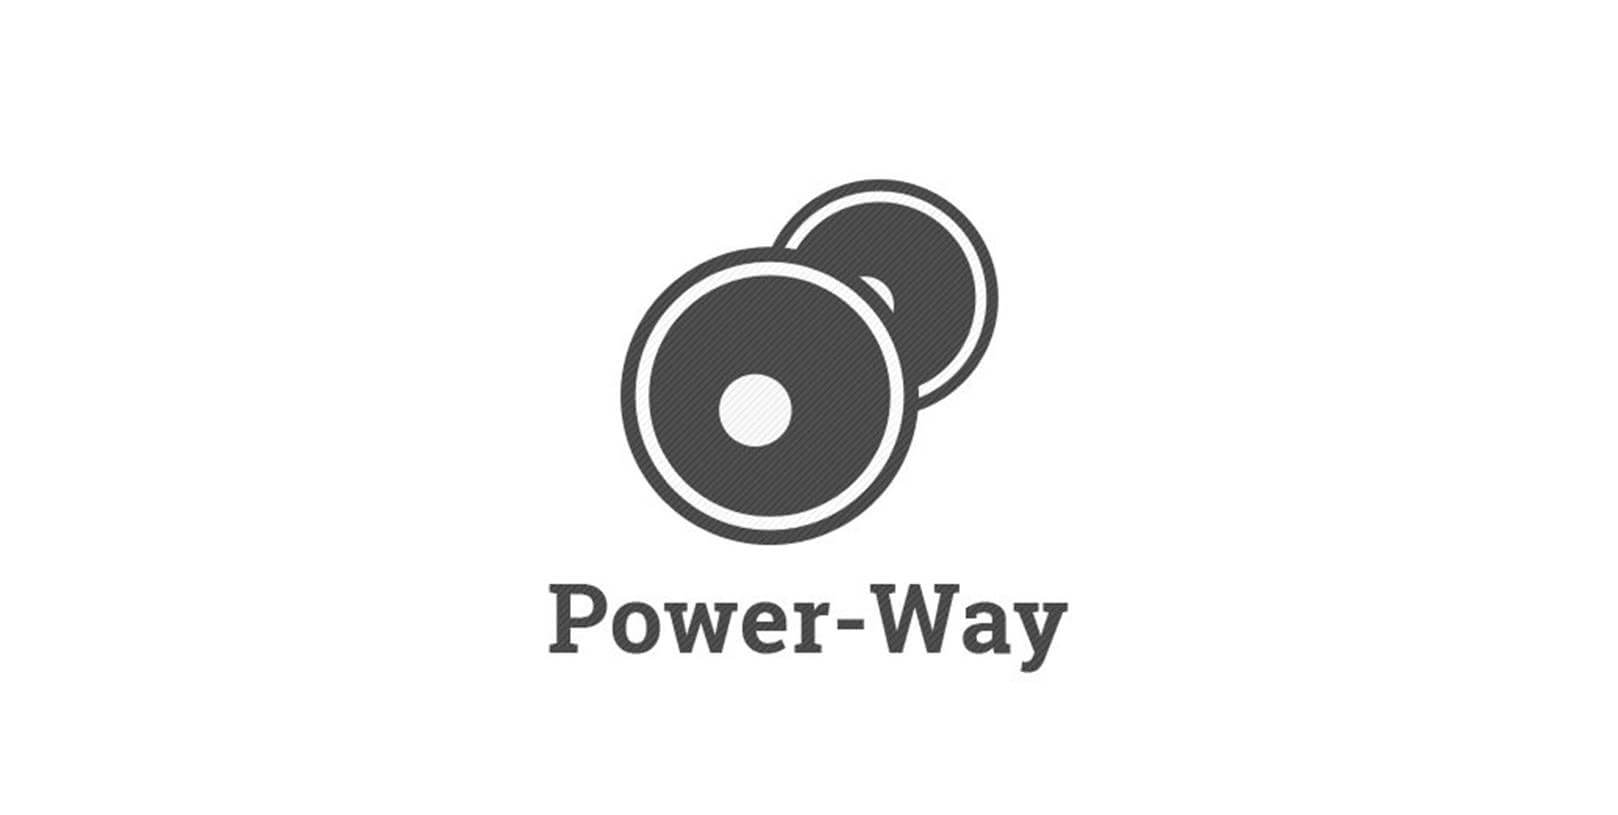 Магазин повер. Power way. Power промокод. Power лого. Cost way логотип.